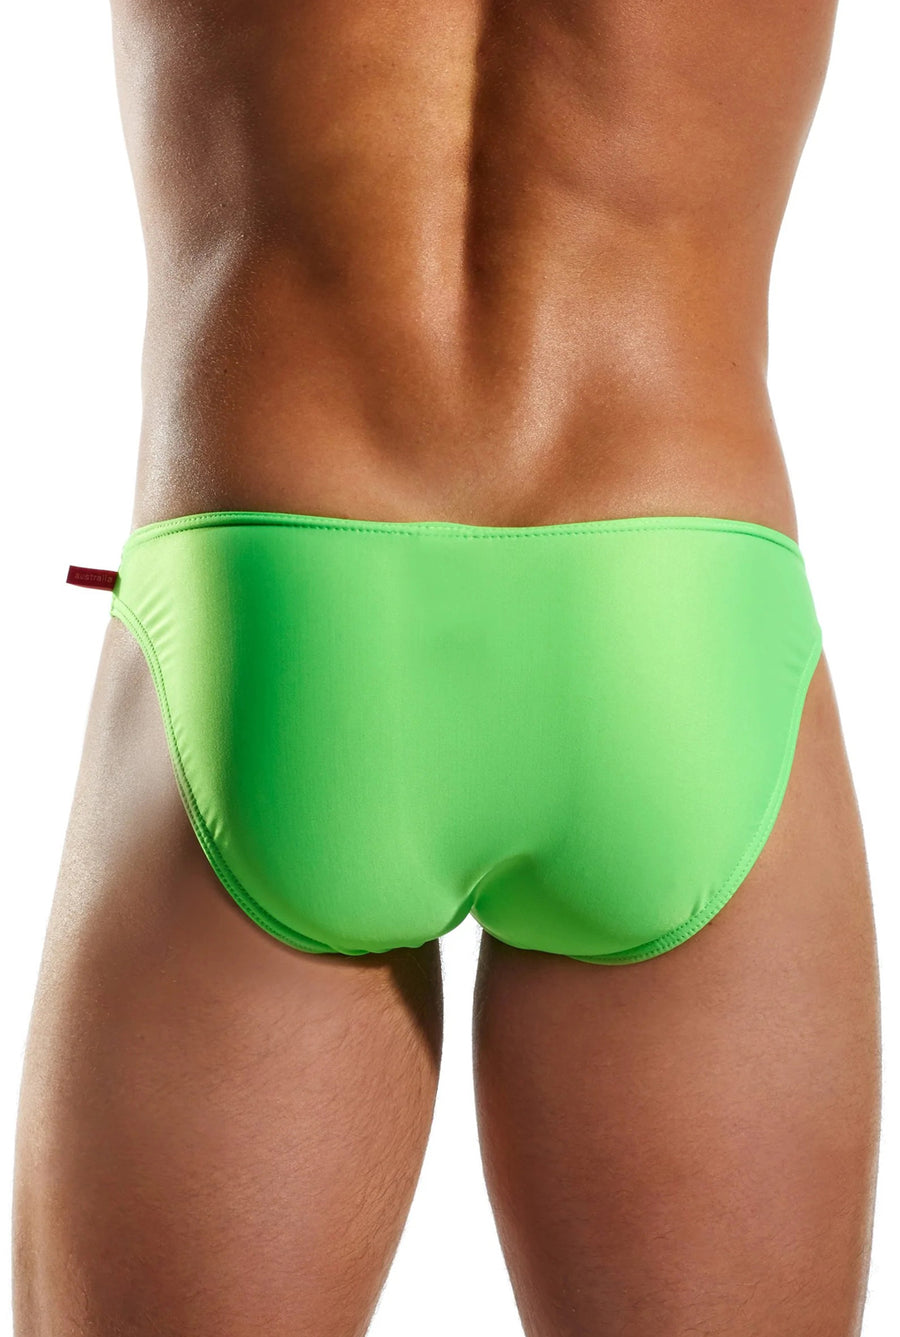 diëtz underwear on X: Bikinis for men lycra #malebulge click here    / X